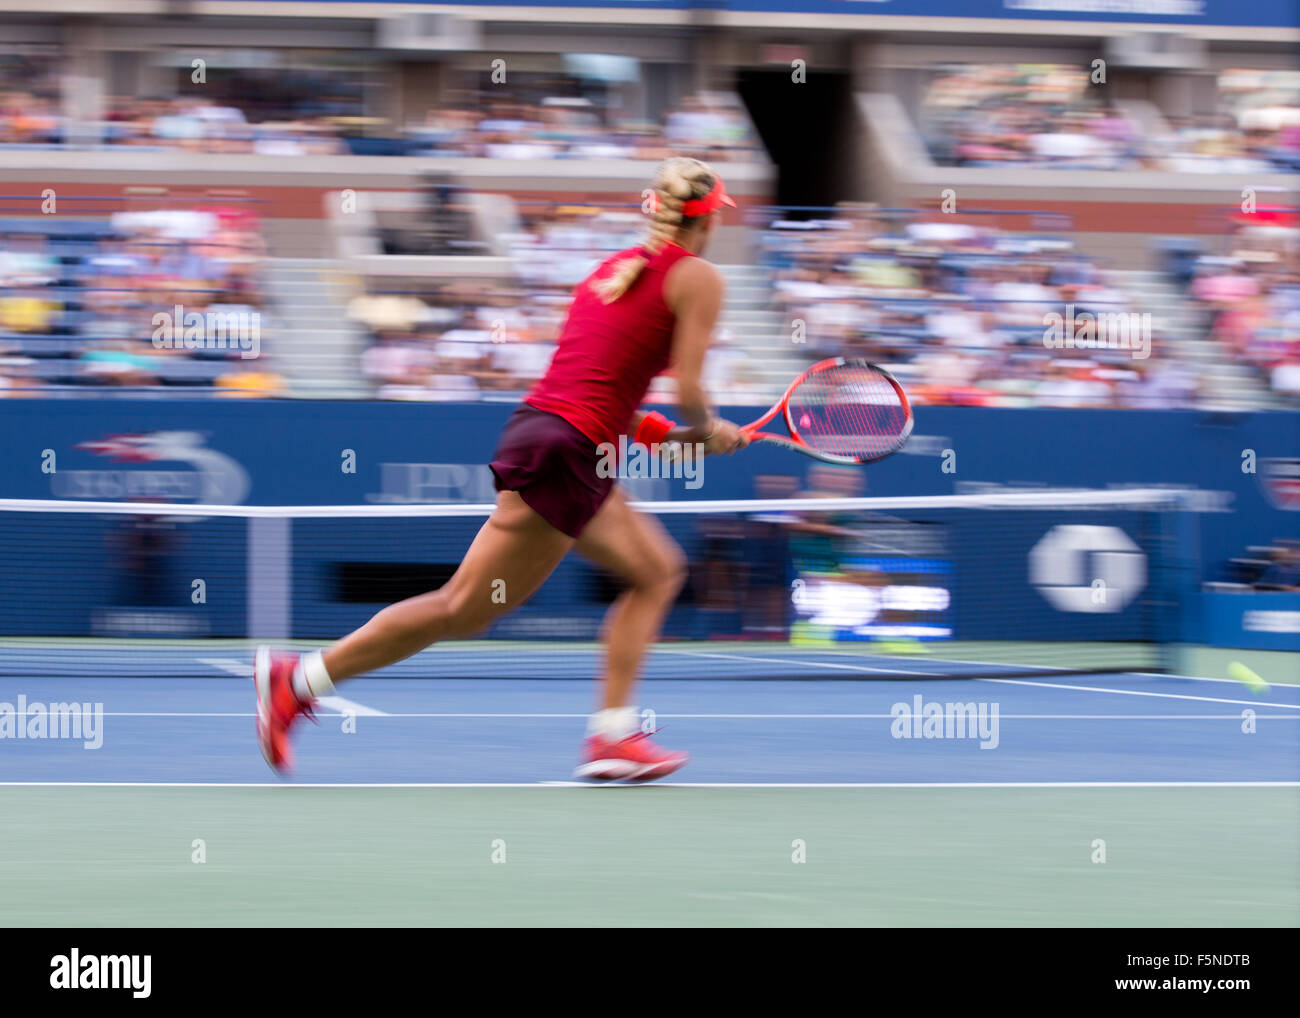 Angelique Kerber (GER) 2015 à l'US Open de Flushing Meadows, l'USTA Billie Jean King National Tennis Center, New York, USA, Banque D'Images